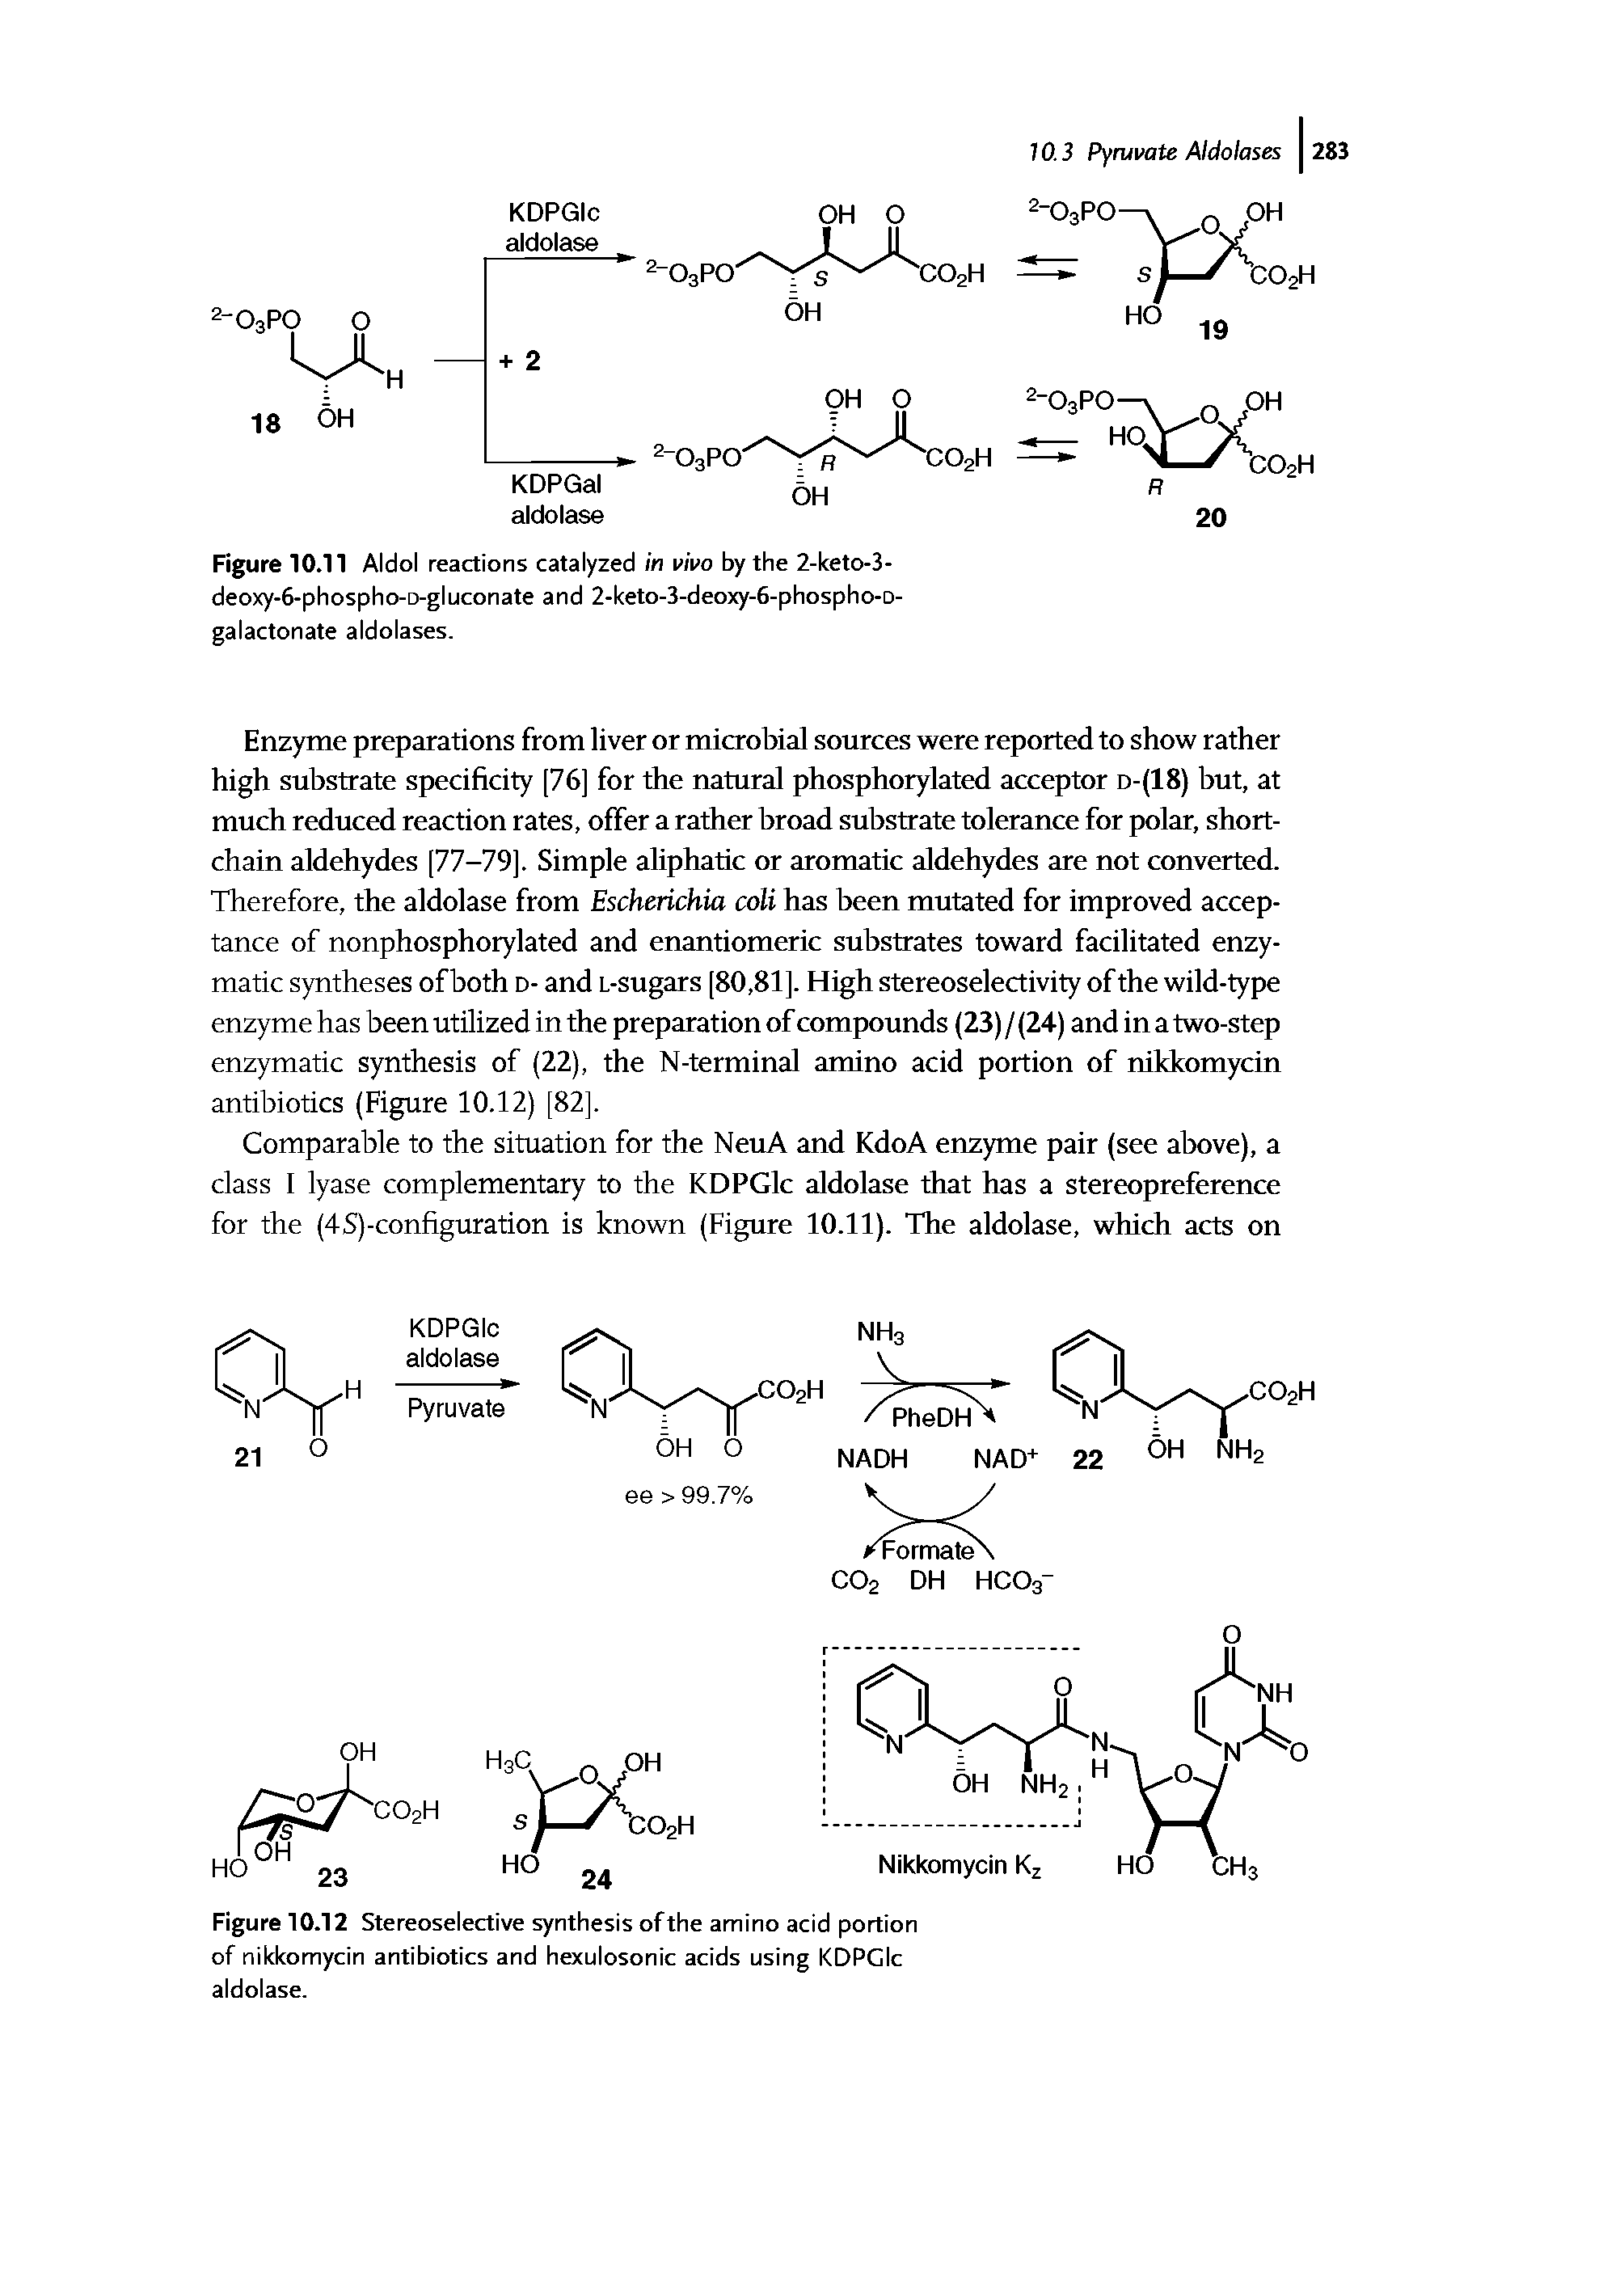 Figure 10.12 Stereoselective synthesis ofthe amino acid portion of nikkomycin antibiotics and hexulosonic acids using KDPGIc aldolase.